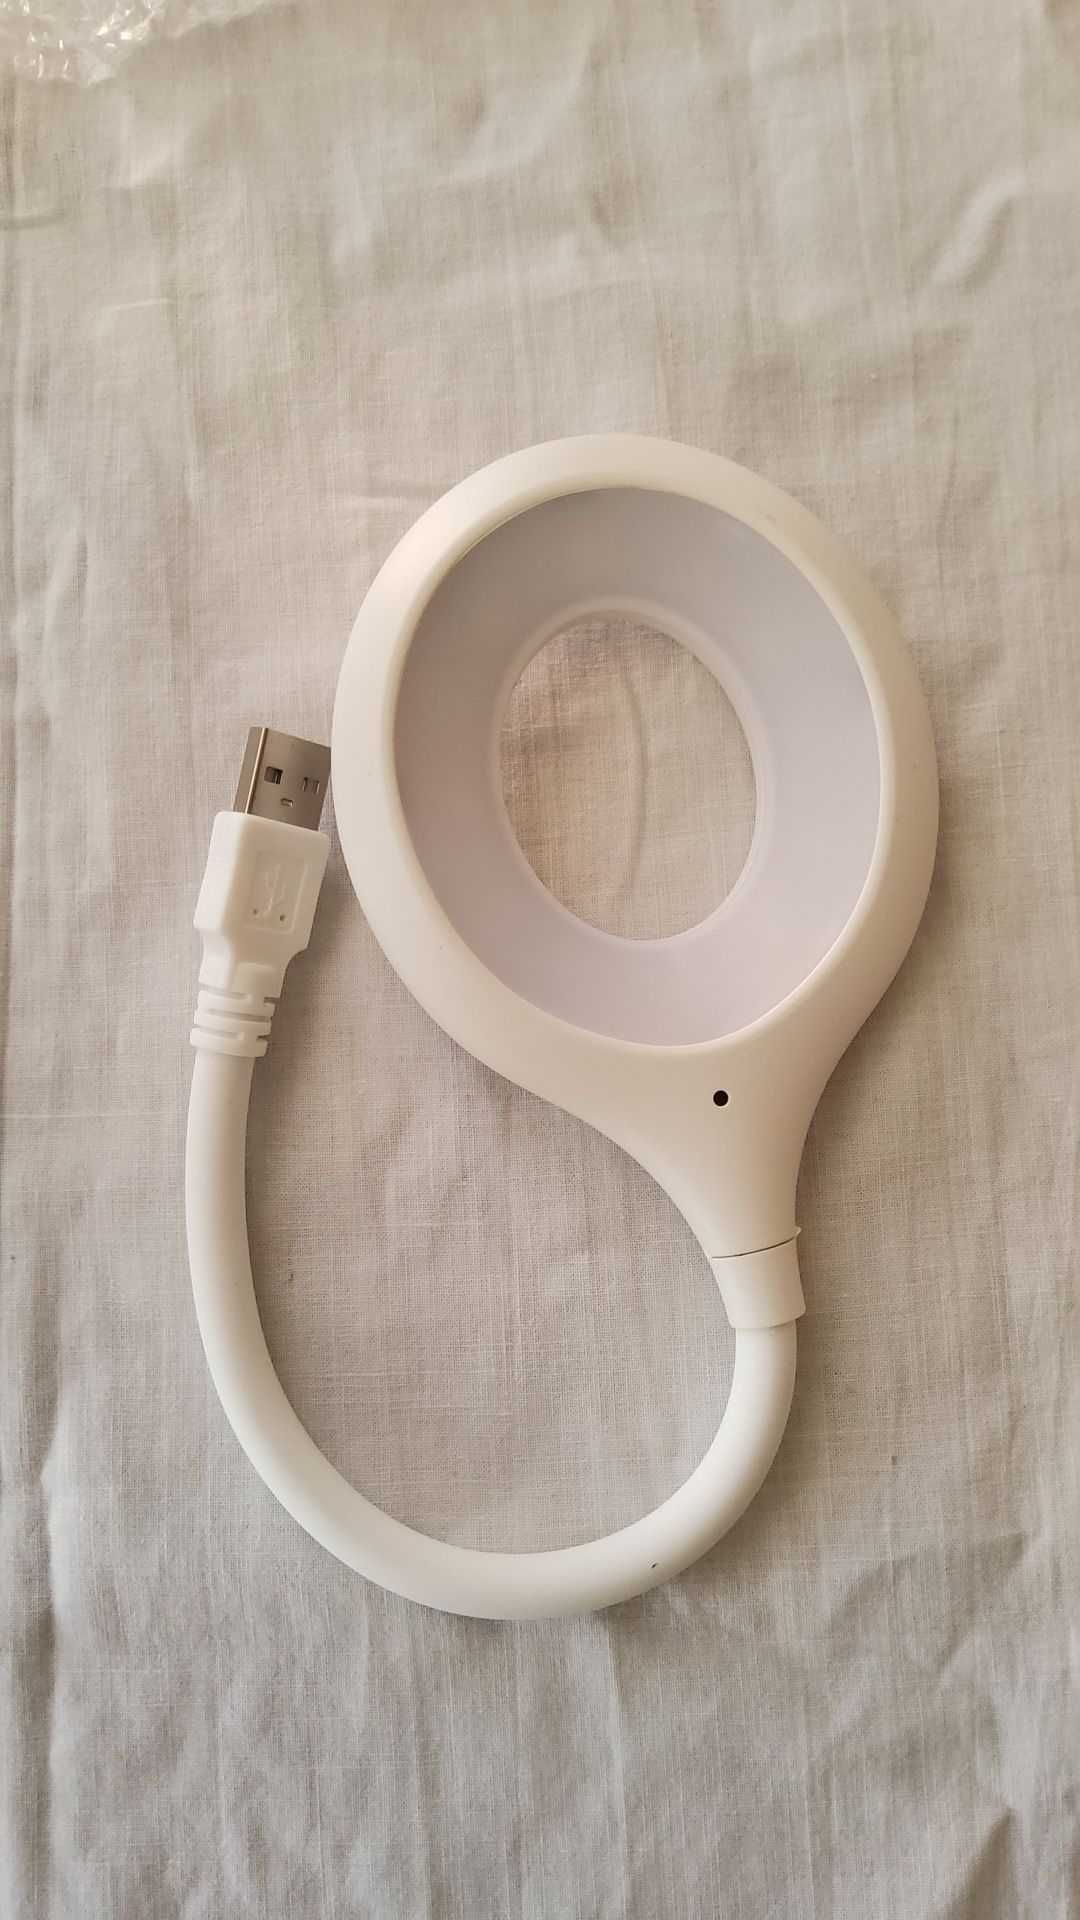 Гибкая USB лампа от Power Bank 5 Вт 24 LED Юсб светильник повербанка